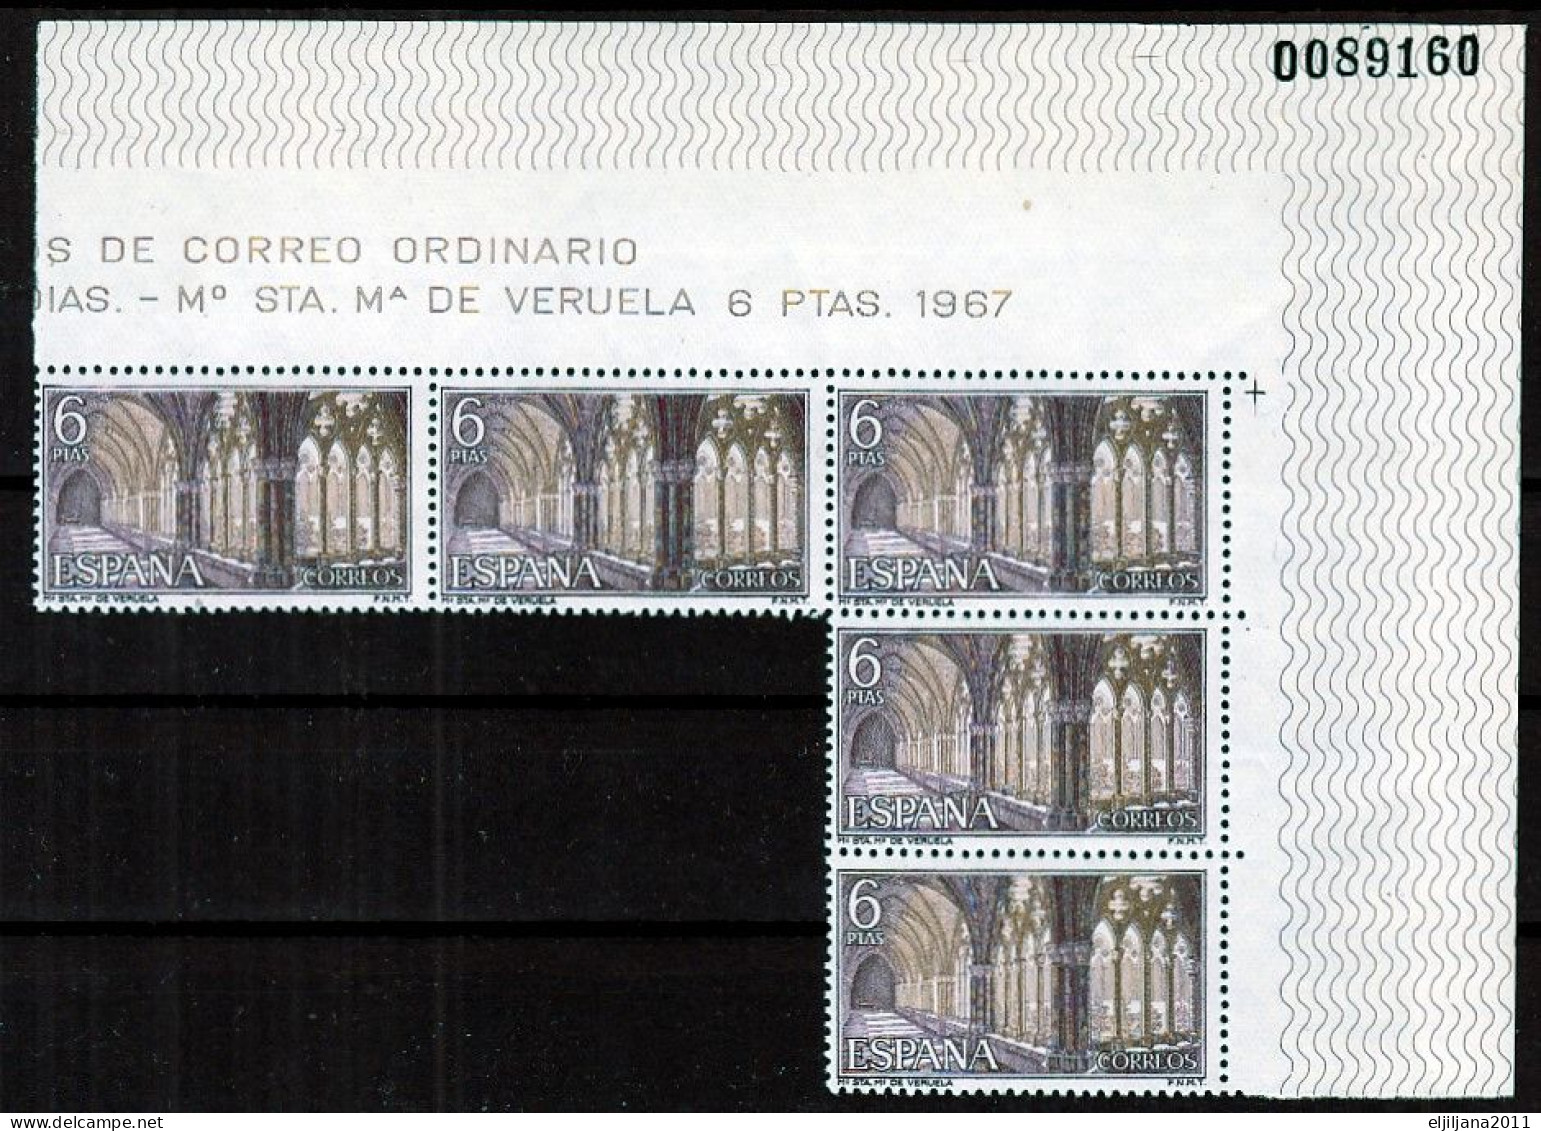 ⁕ SPAIN / ESPANA 1967 ⁕ Monasteries And Abbeys Mi.1728 - 1730 X 5 ⁕ MNH - See Scan - Nuevos